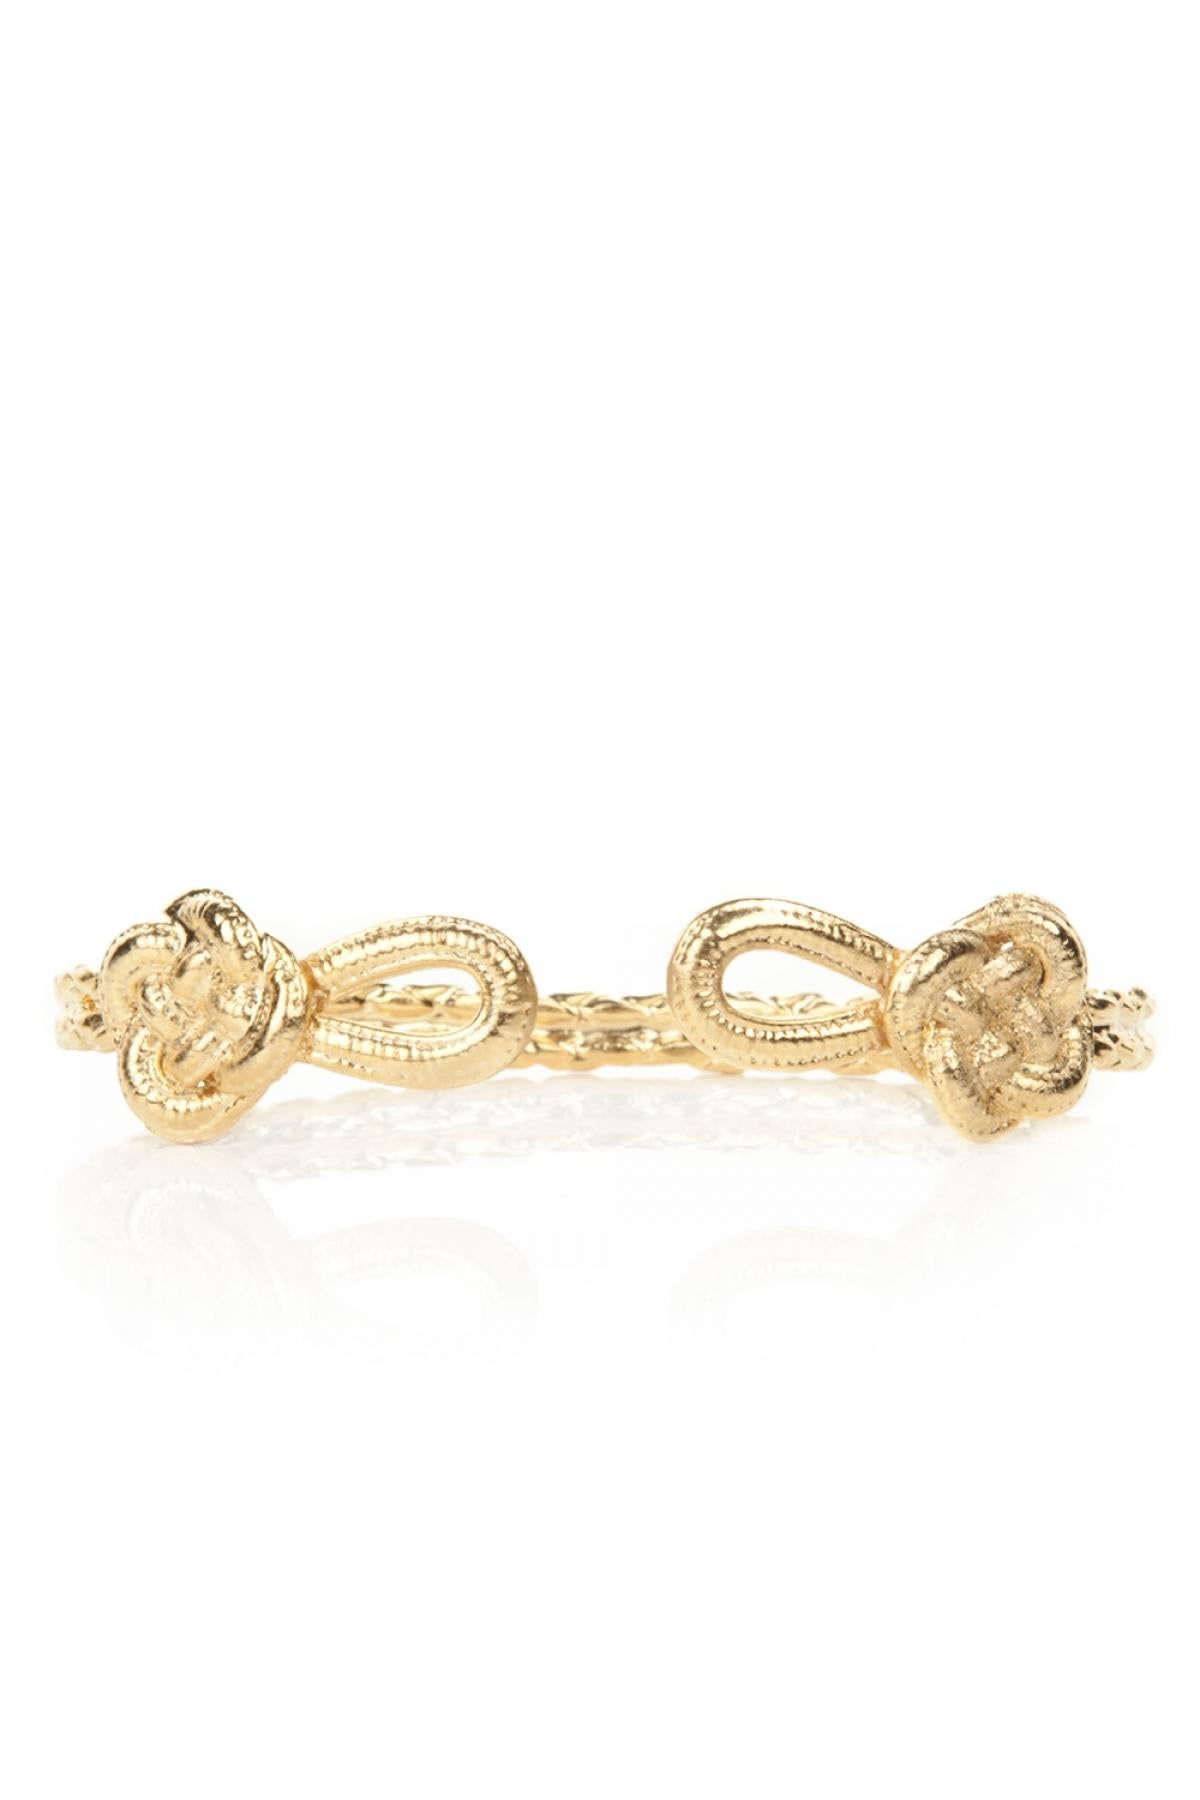 chinese gold bracelet design